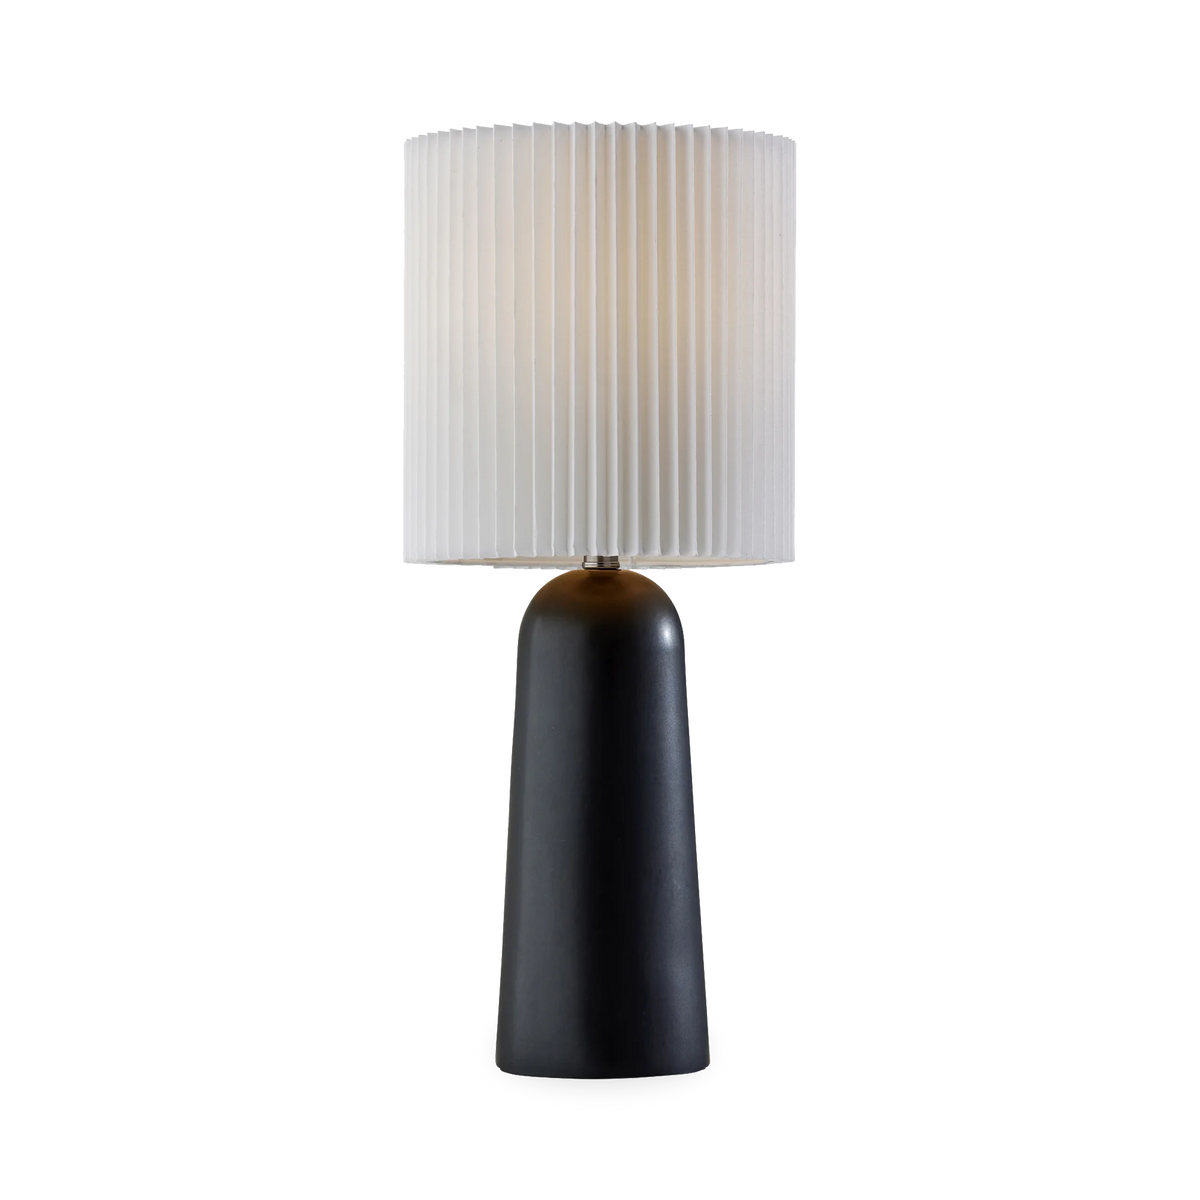 The Callie Table Lamp creates an elegant atmosphere wherever it resides.